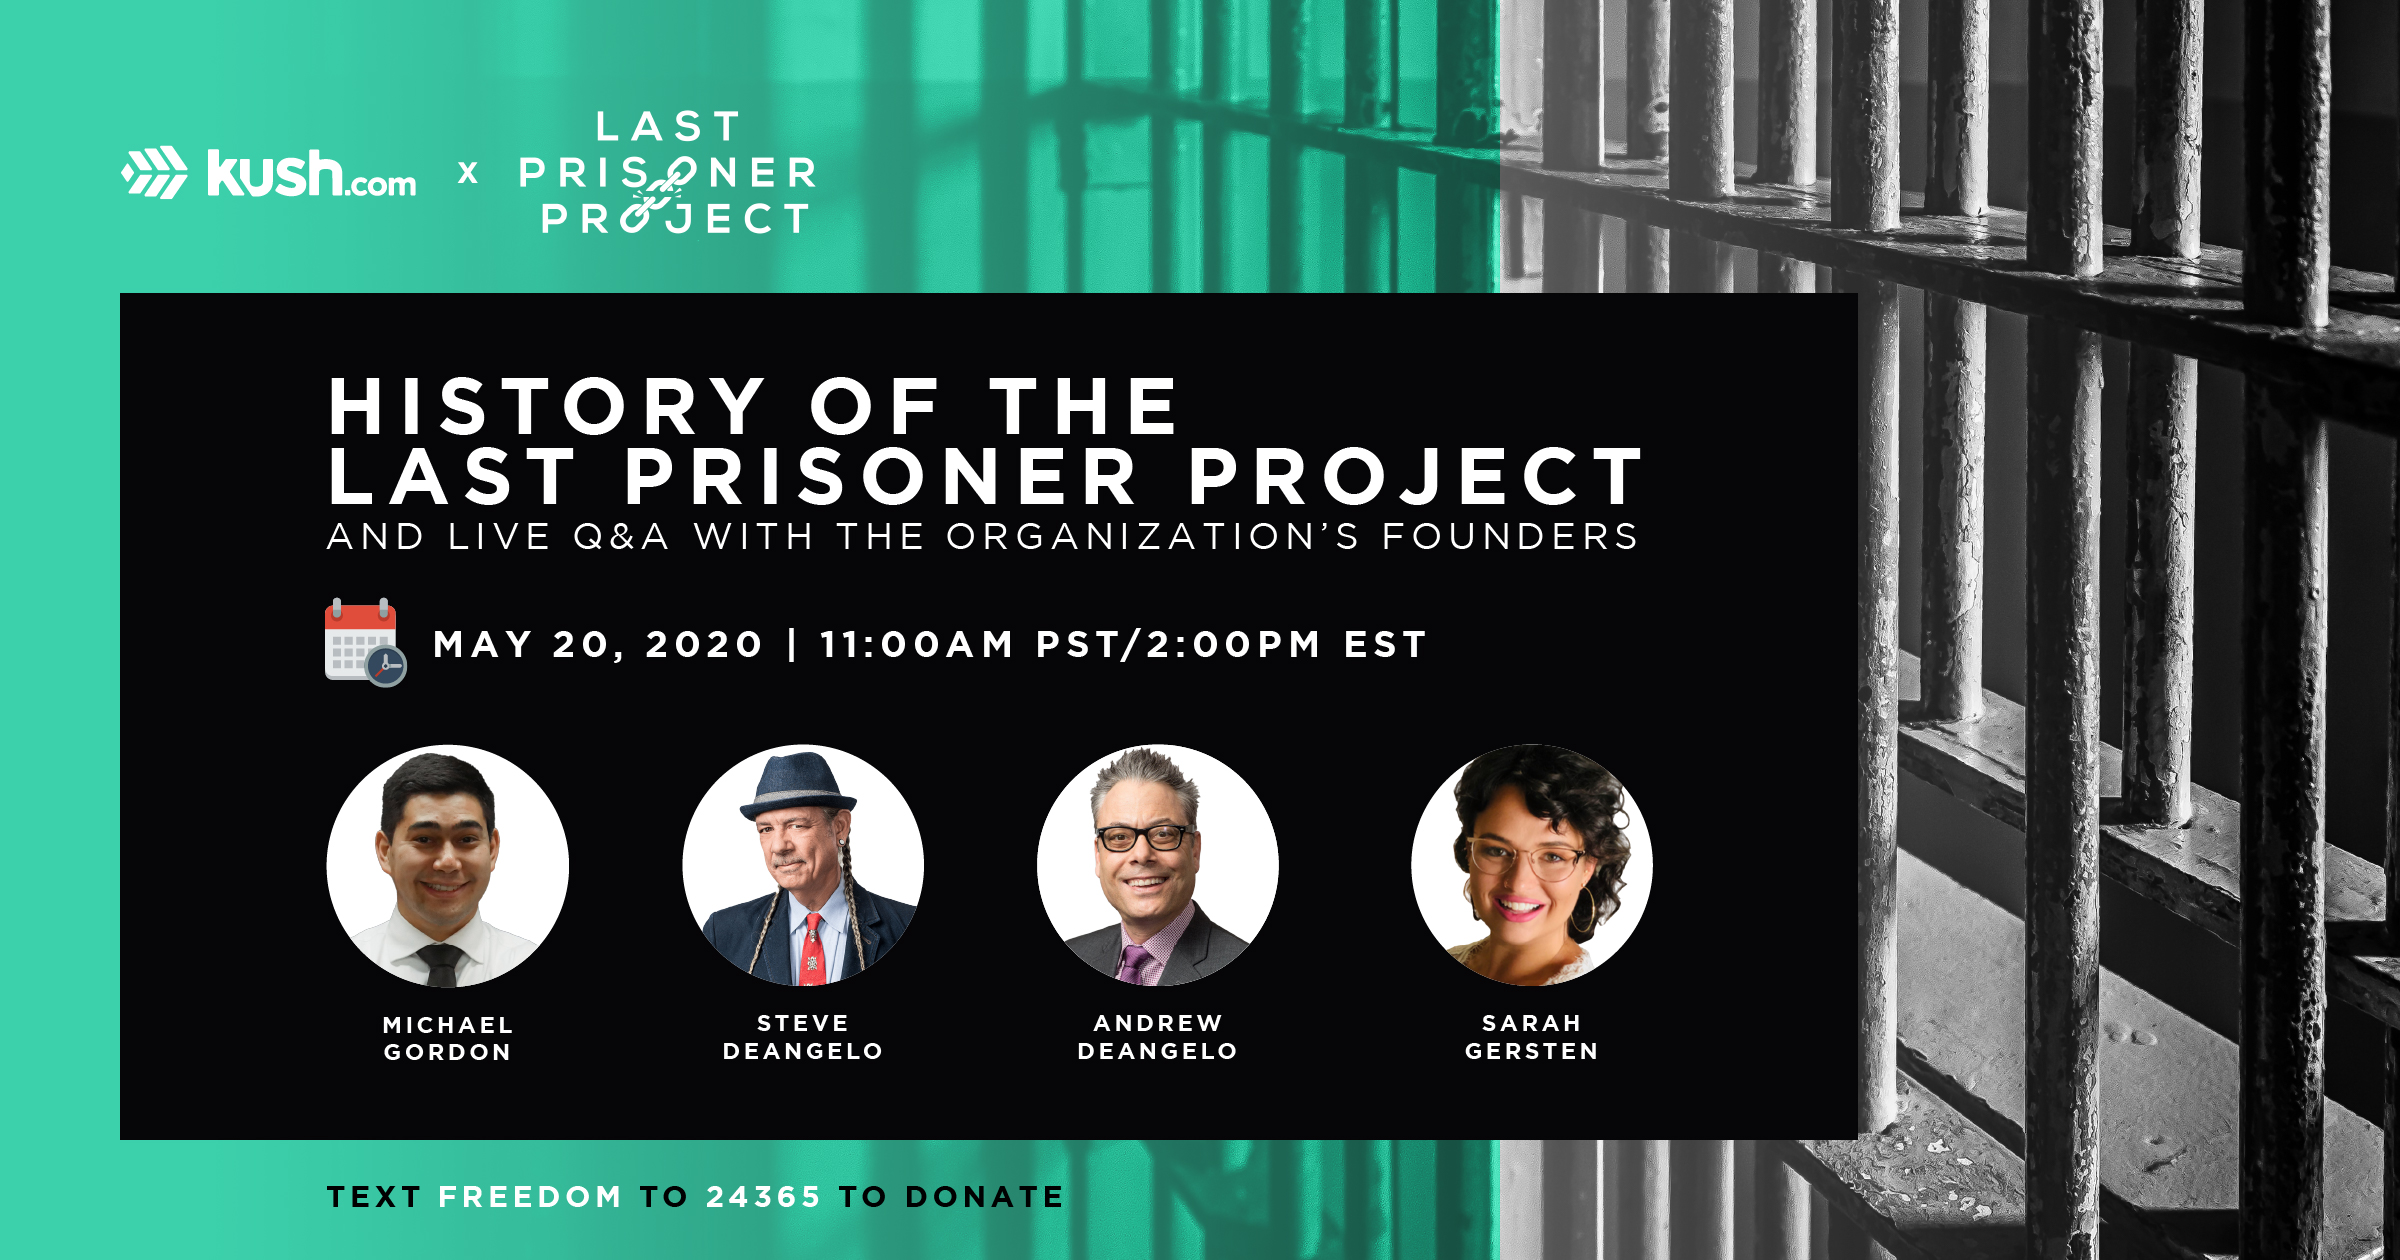 Join Steve DeAngelo, Andrew DeAngelo and Sarah Gersten for the History of the Last Prisoner Project